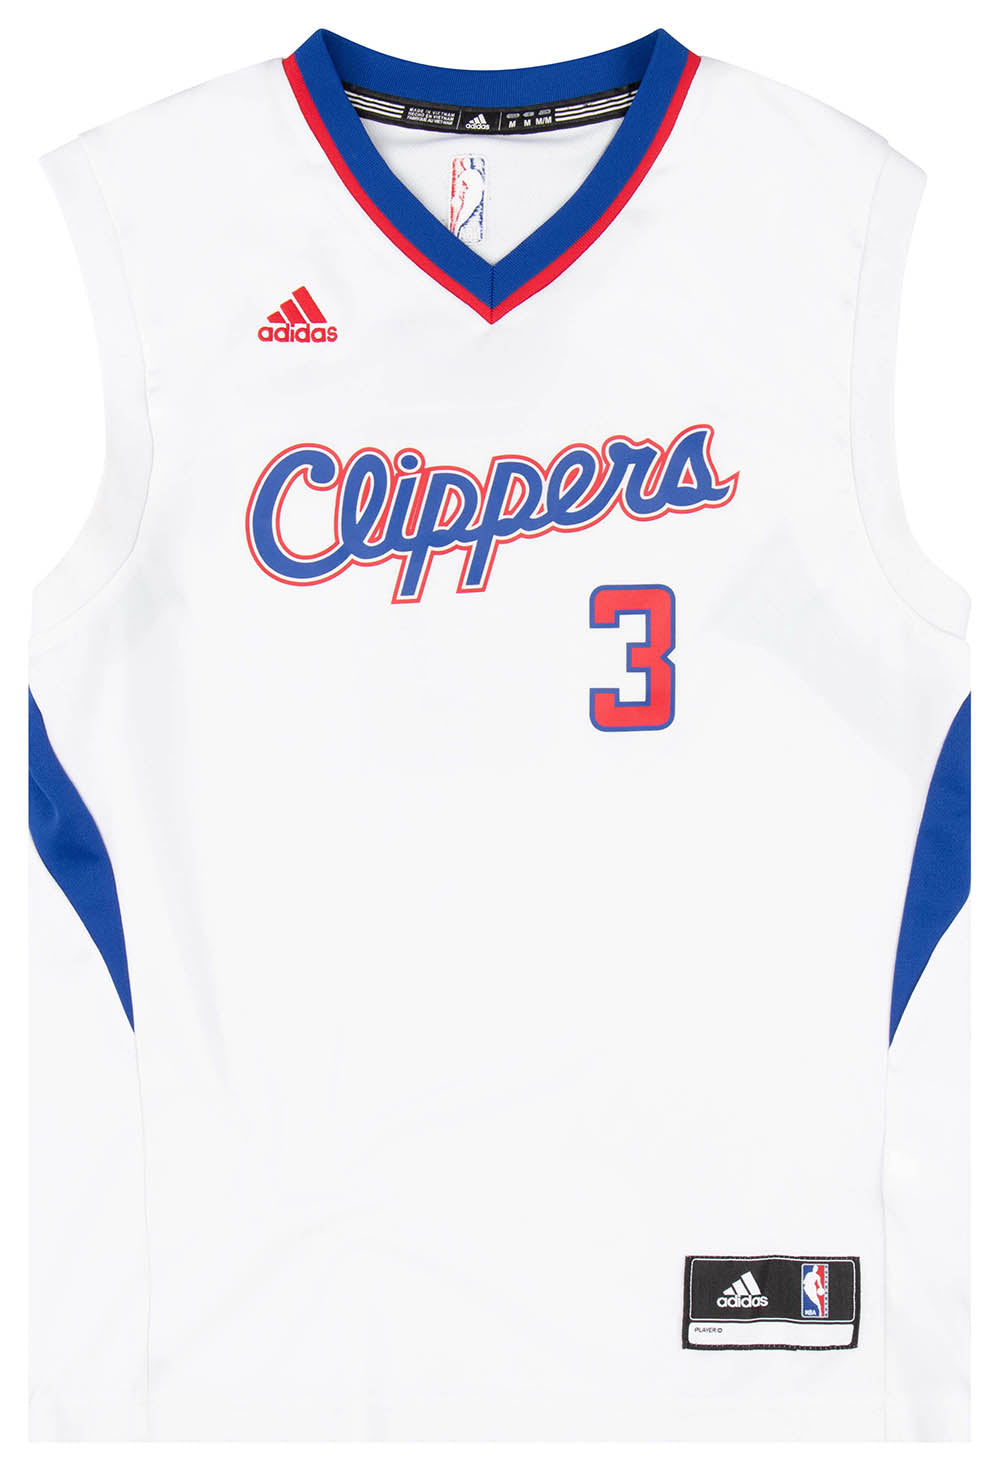 LA Clippers jersey